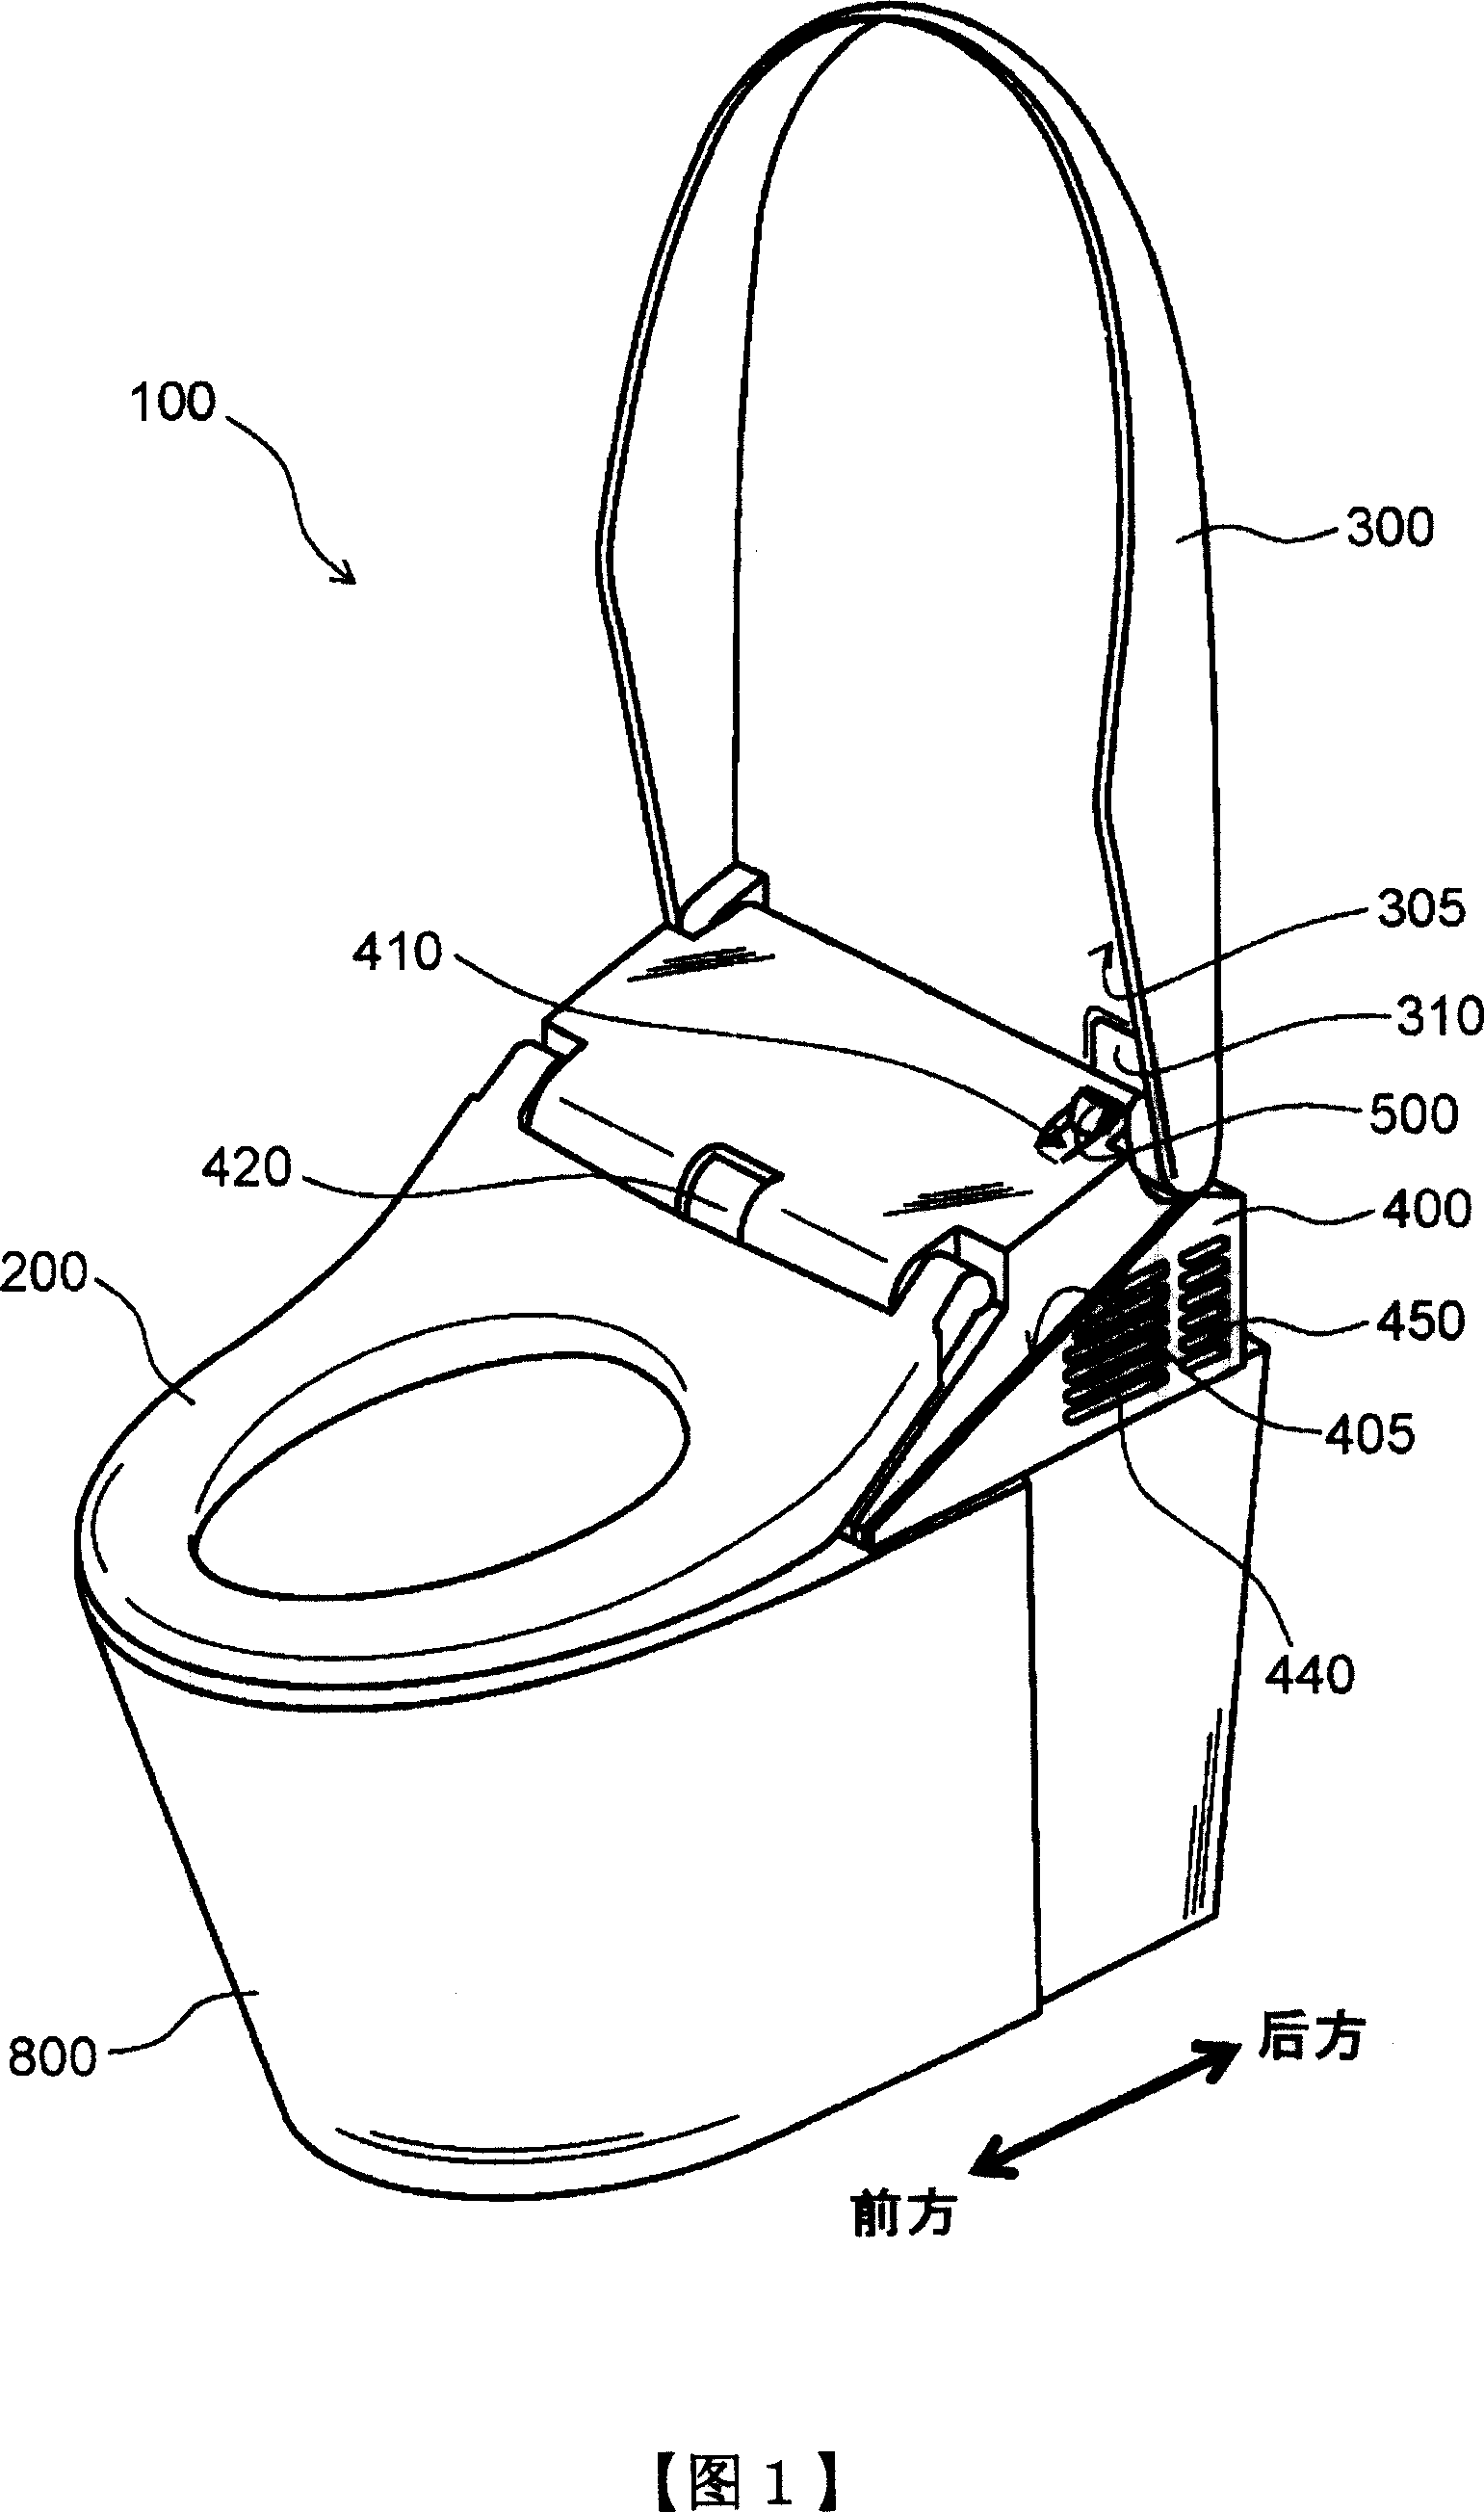 Toilet flushing device